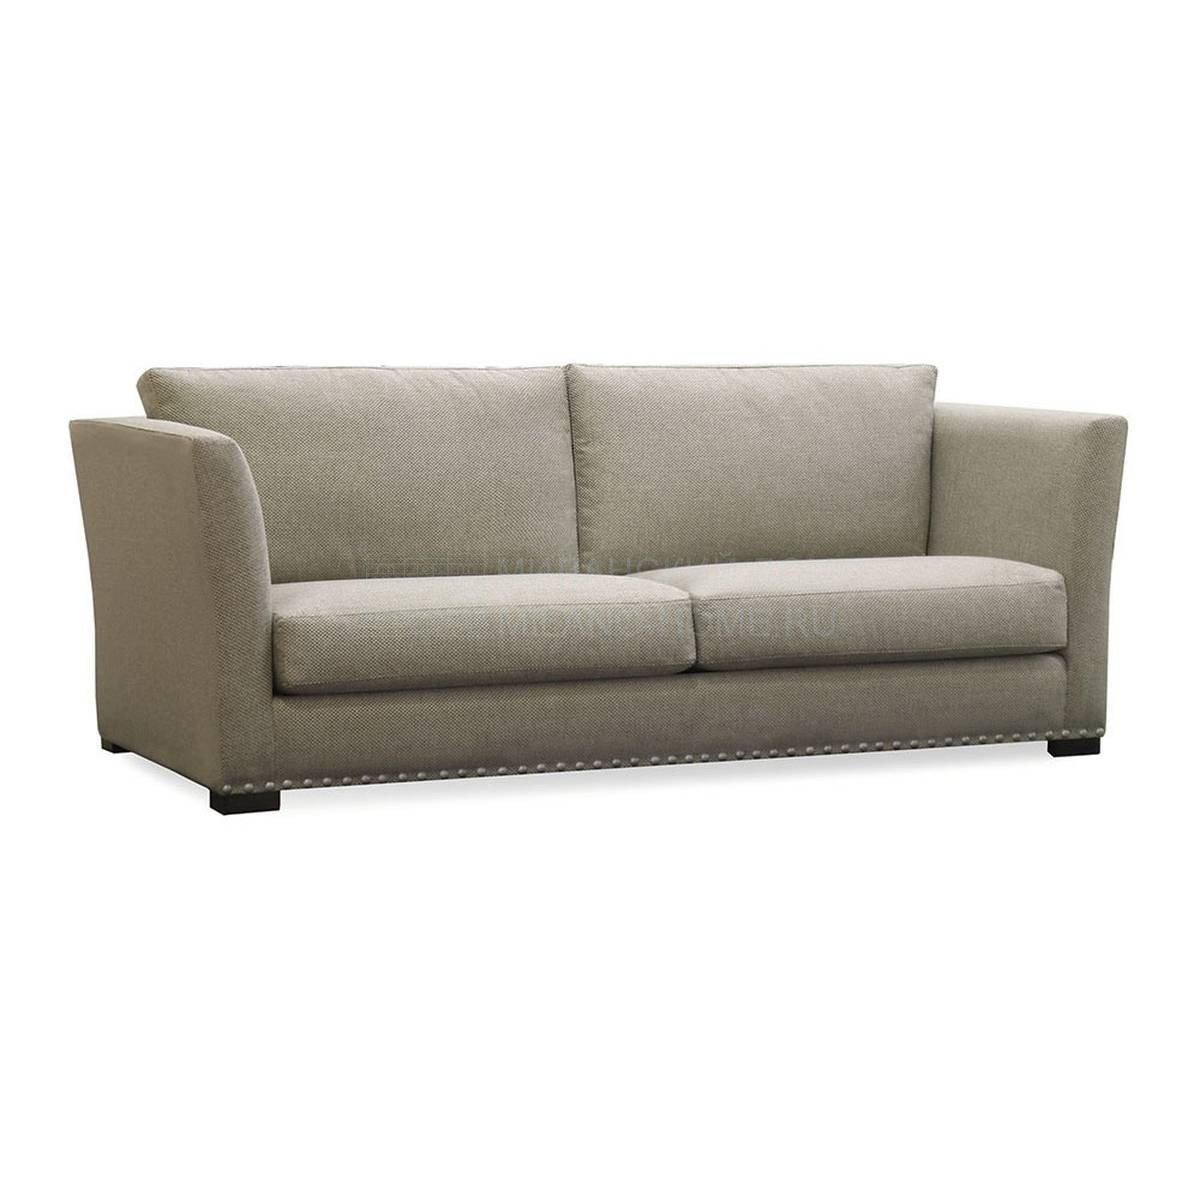 Прямой диван Olimpia/sofa из Испании фабрики MANUEL LARRAGA